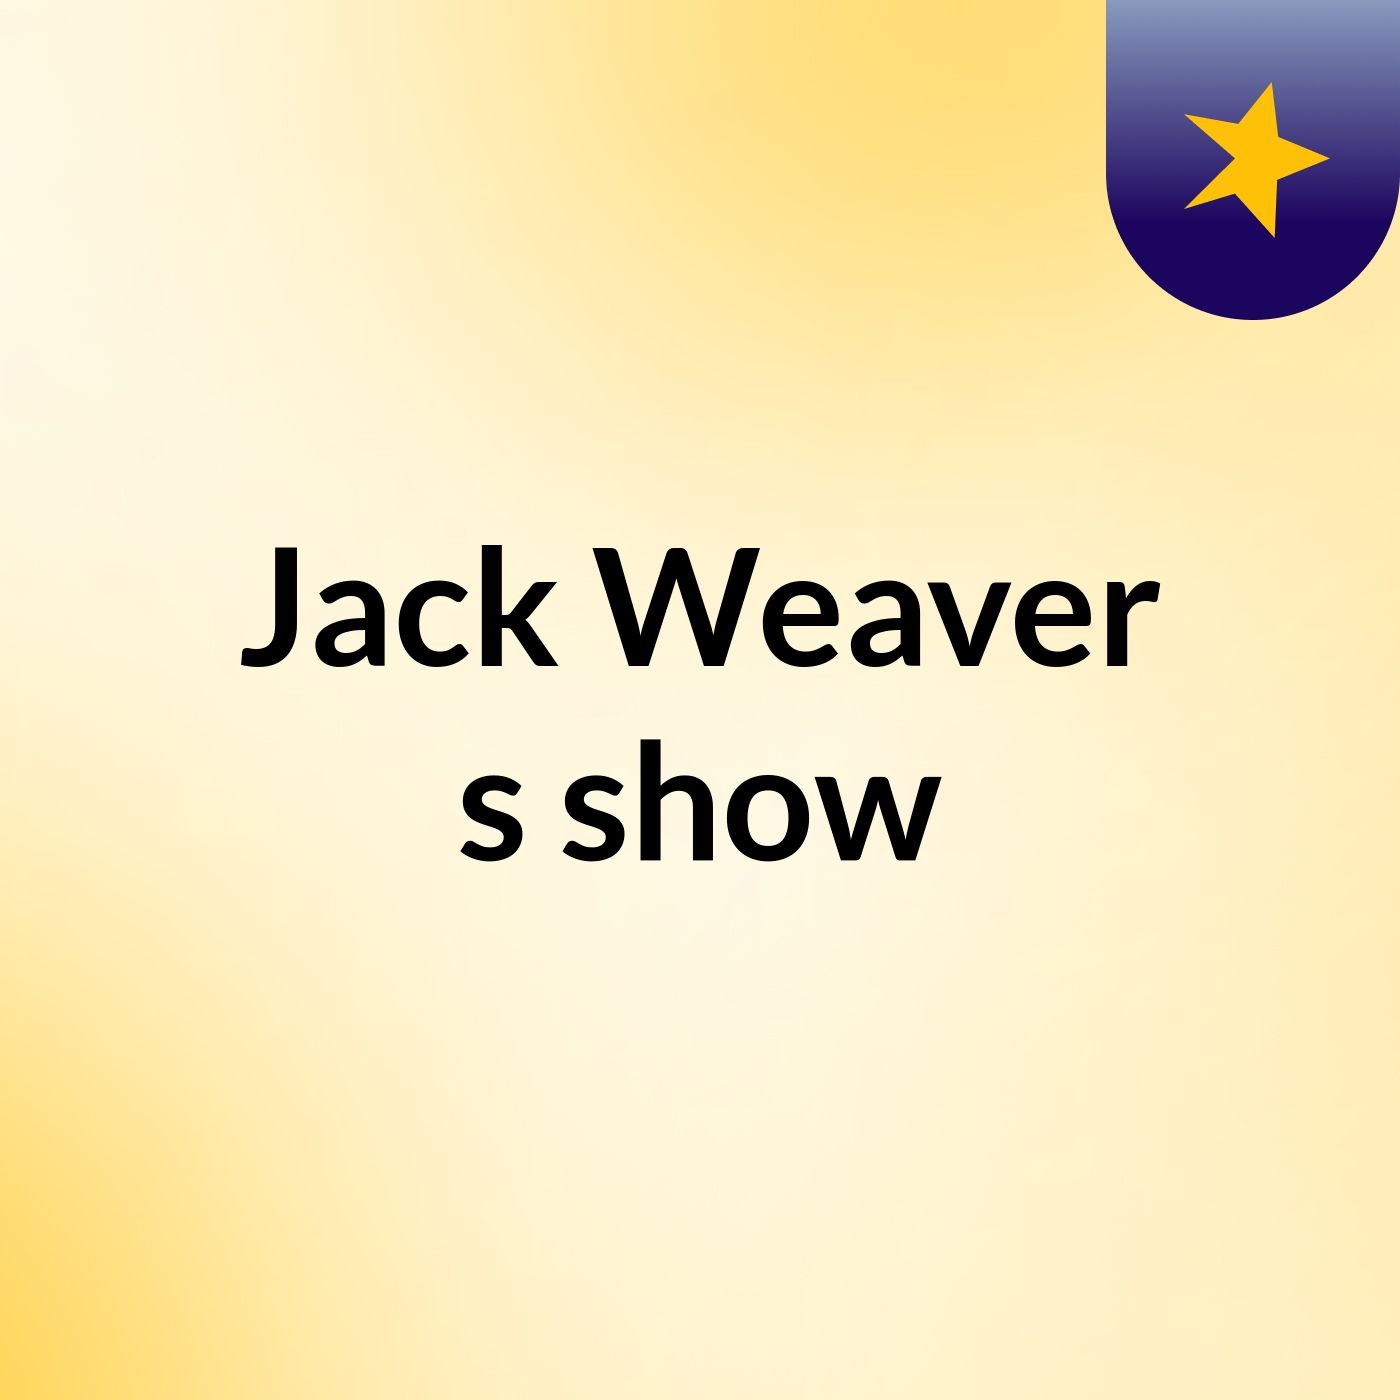 Jack Weaver's show